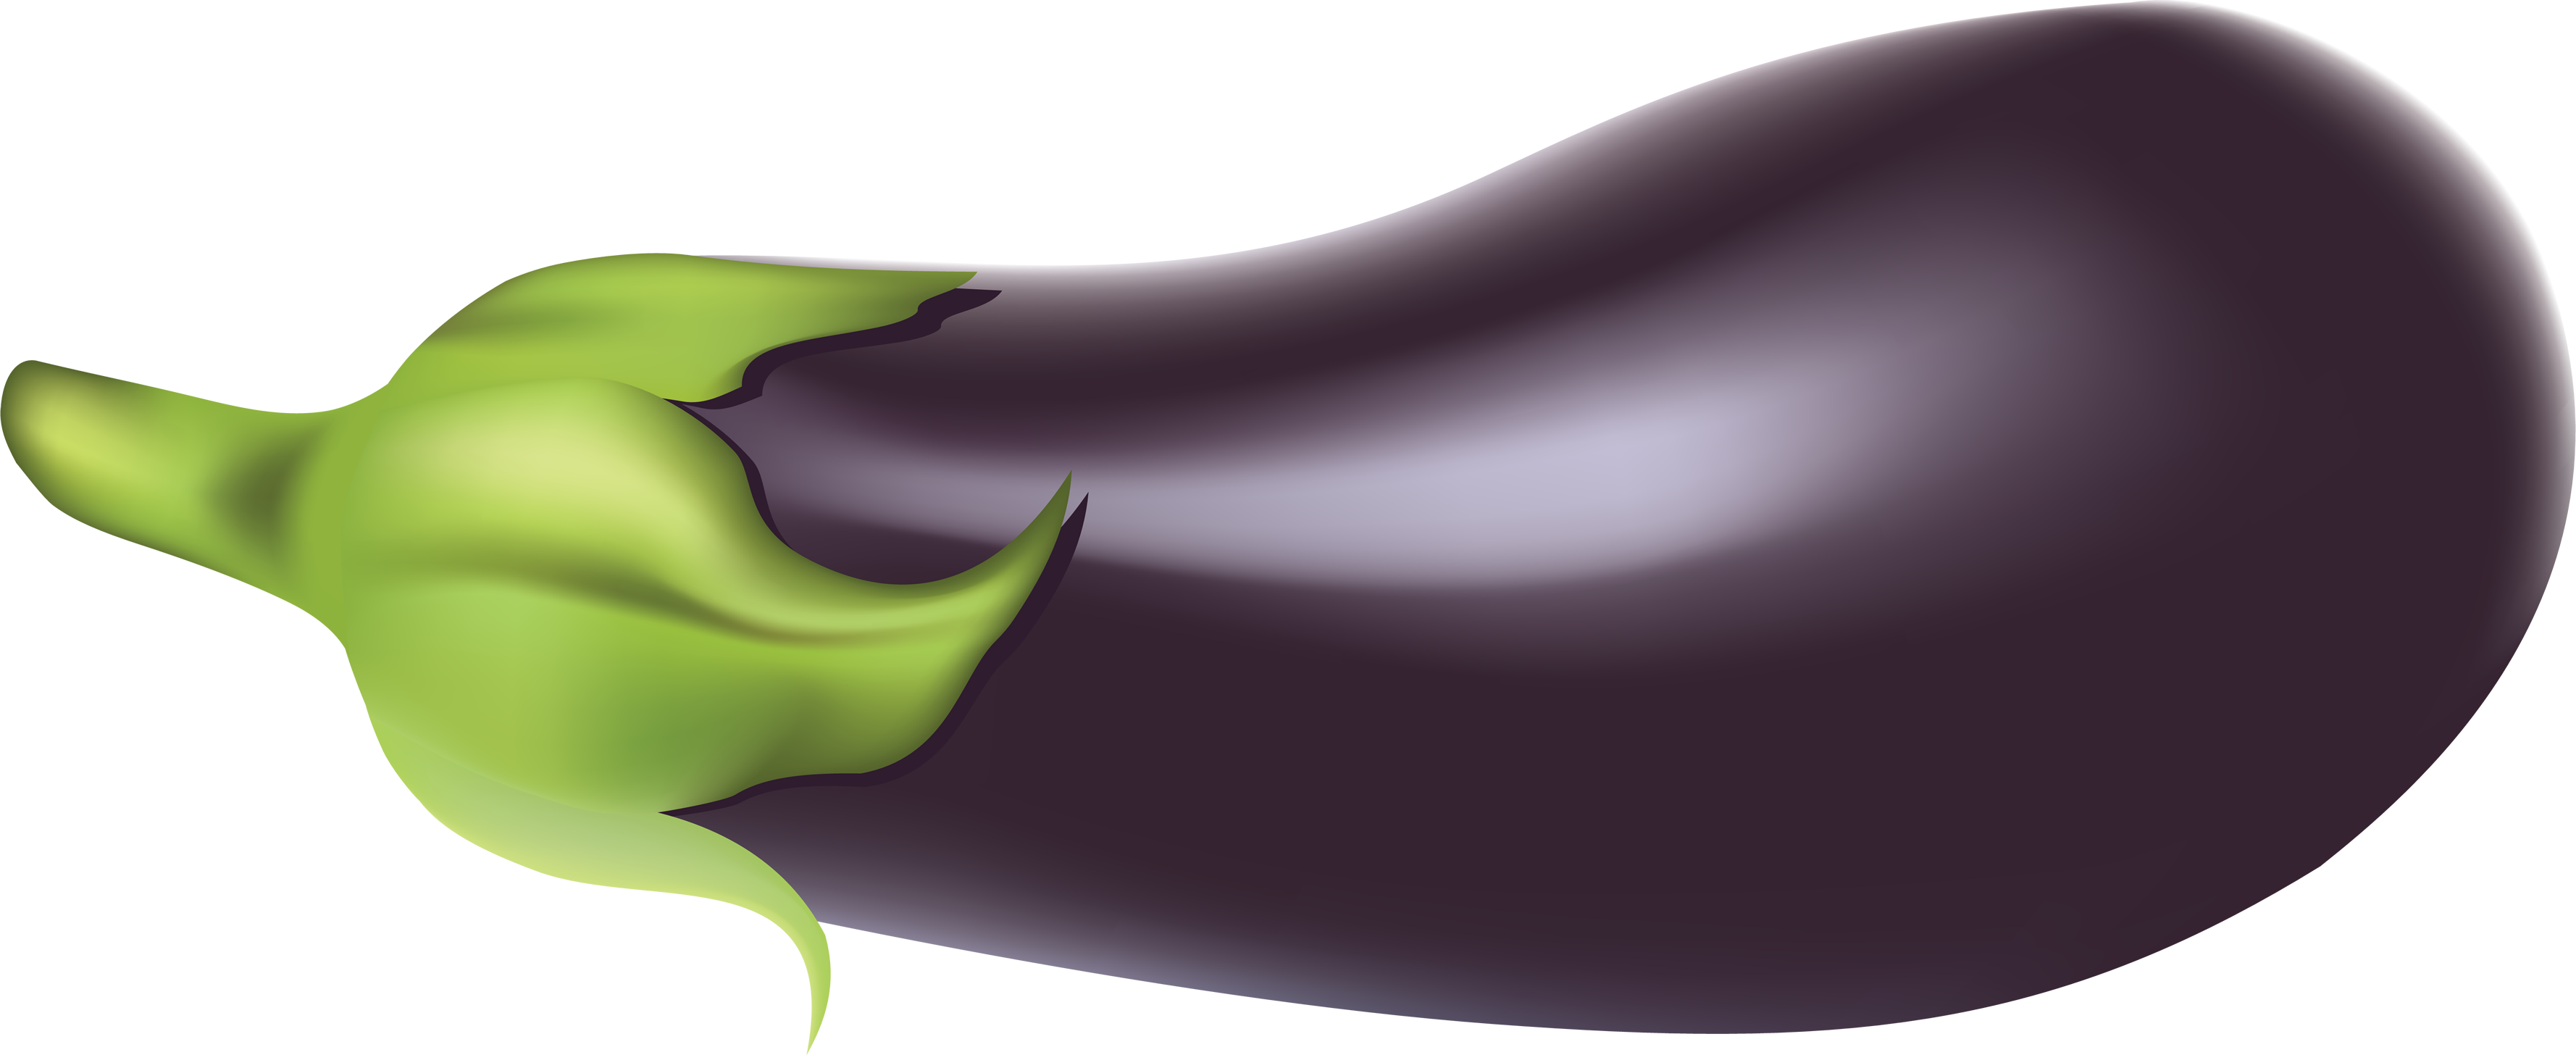 Eggplant Background. Eggplant Wallpaper